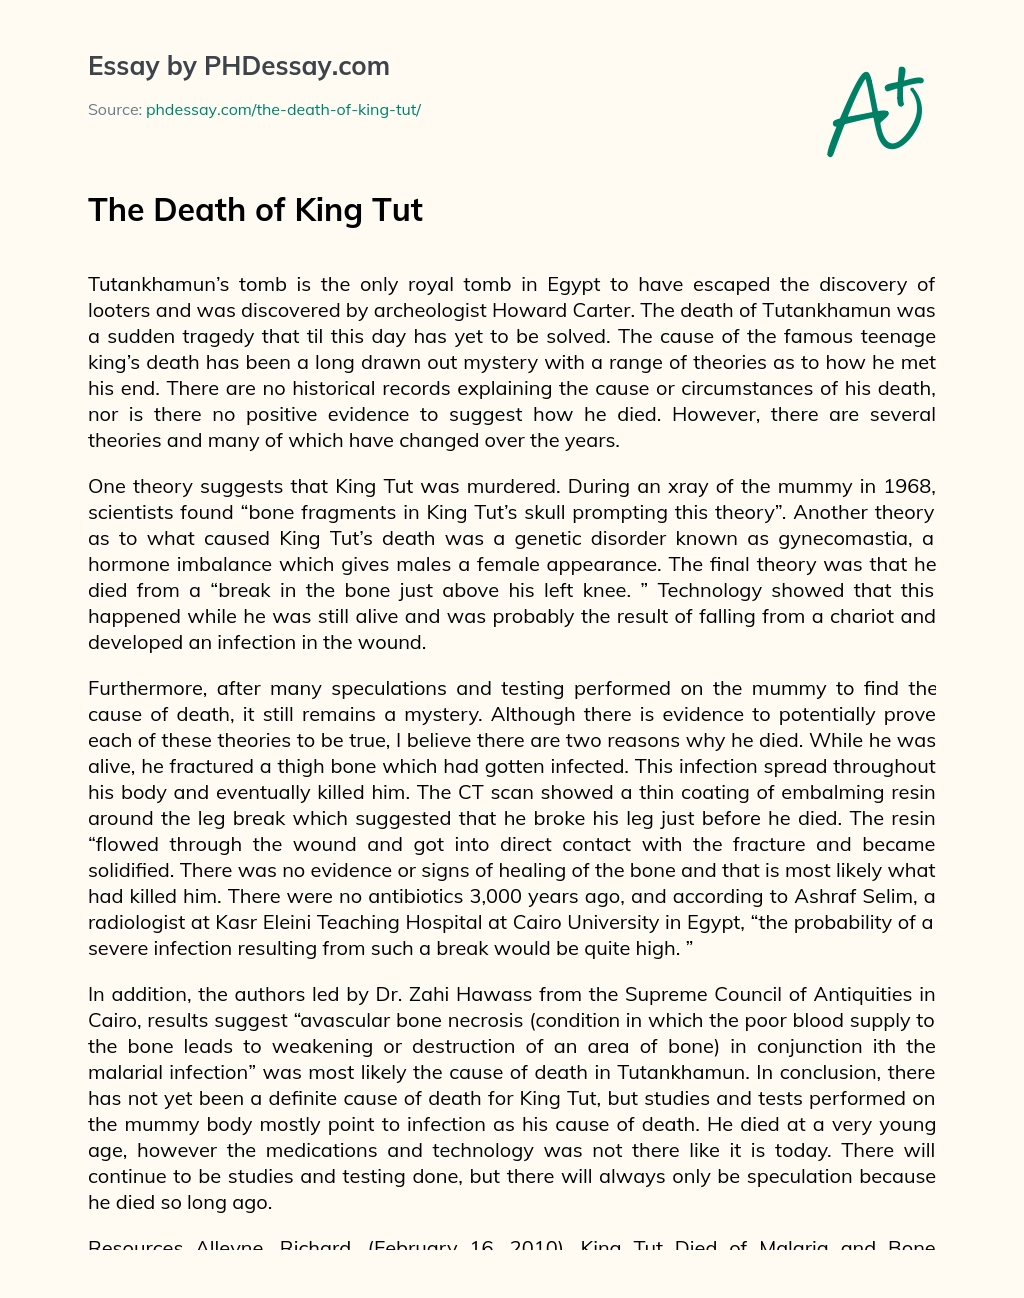 The Death of King Tut essay